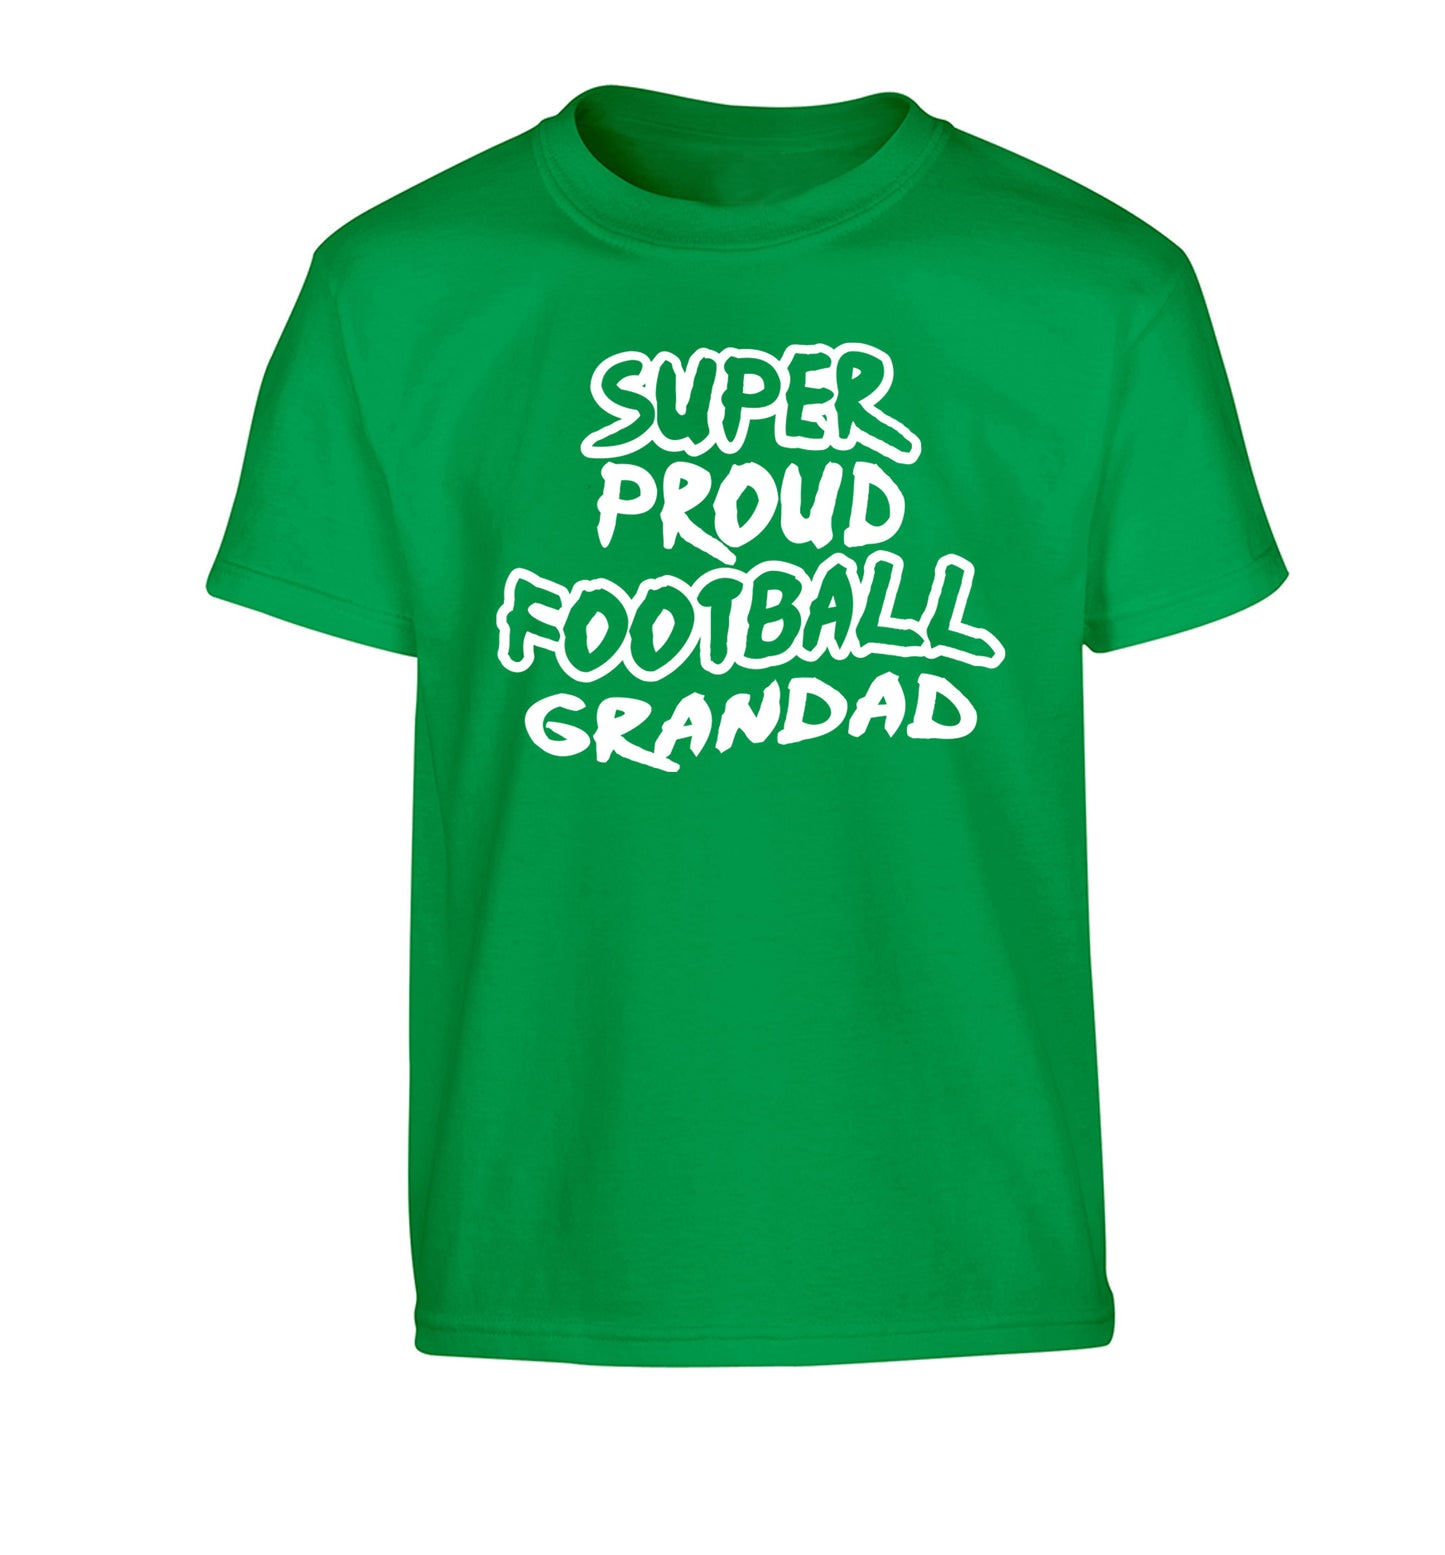 Super proud football grandad Children's green Tshirt 12-14 Years